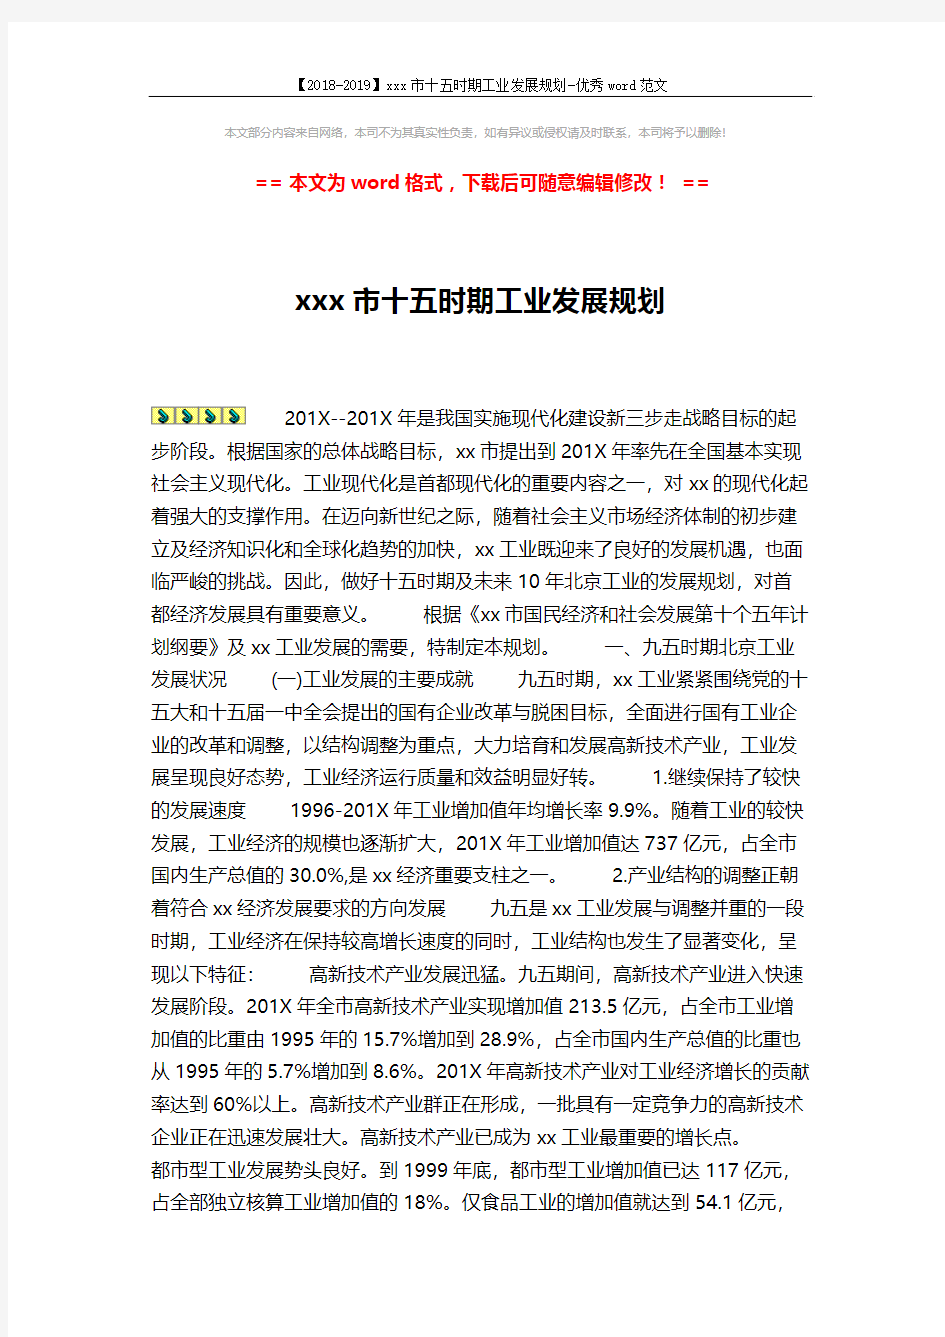 【2018-2019】xxx市十五时期工业发展规划-优秀word范文 (16页)